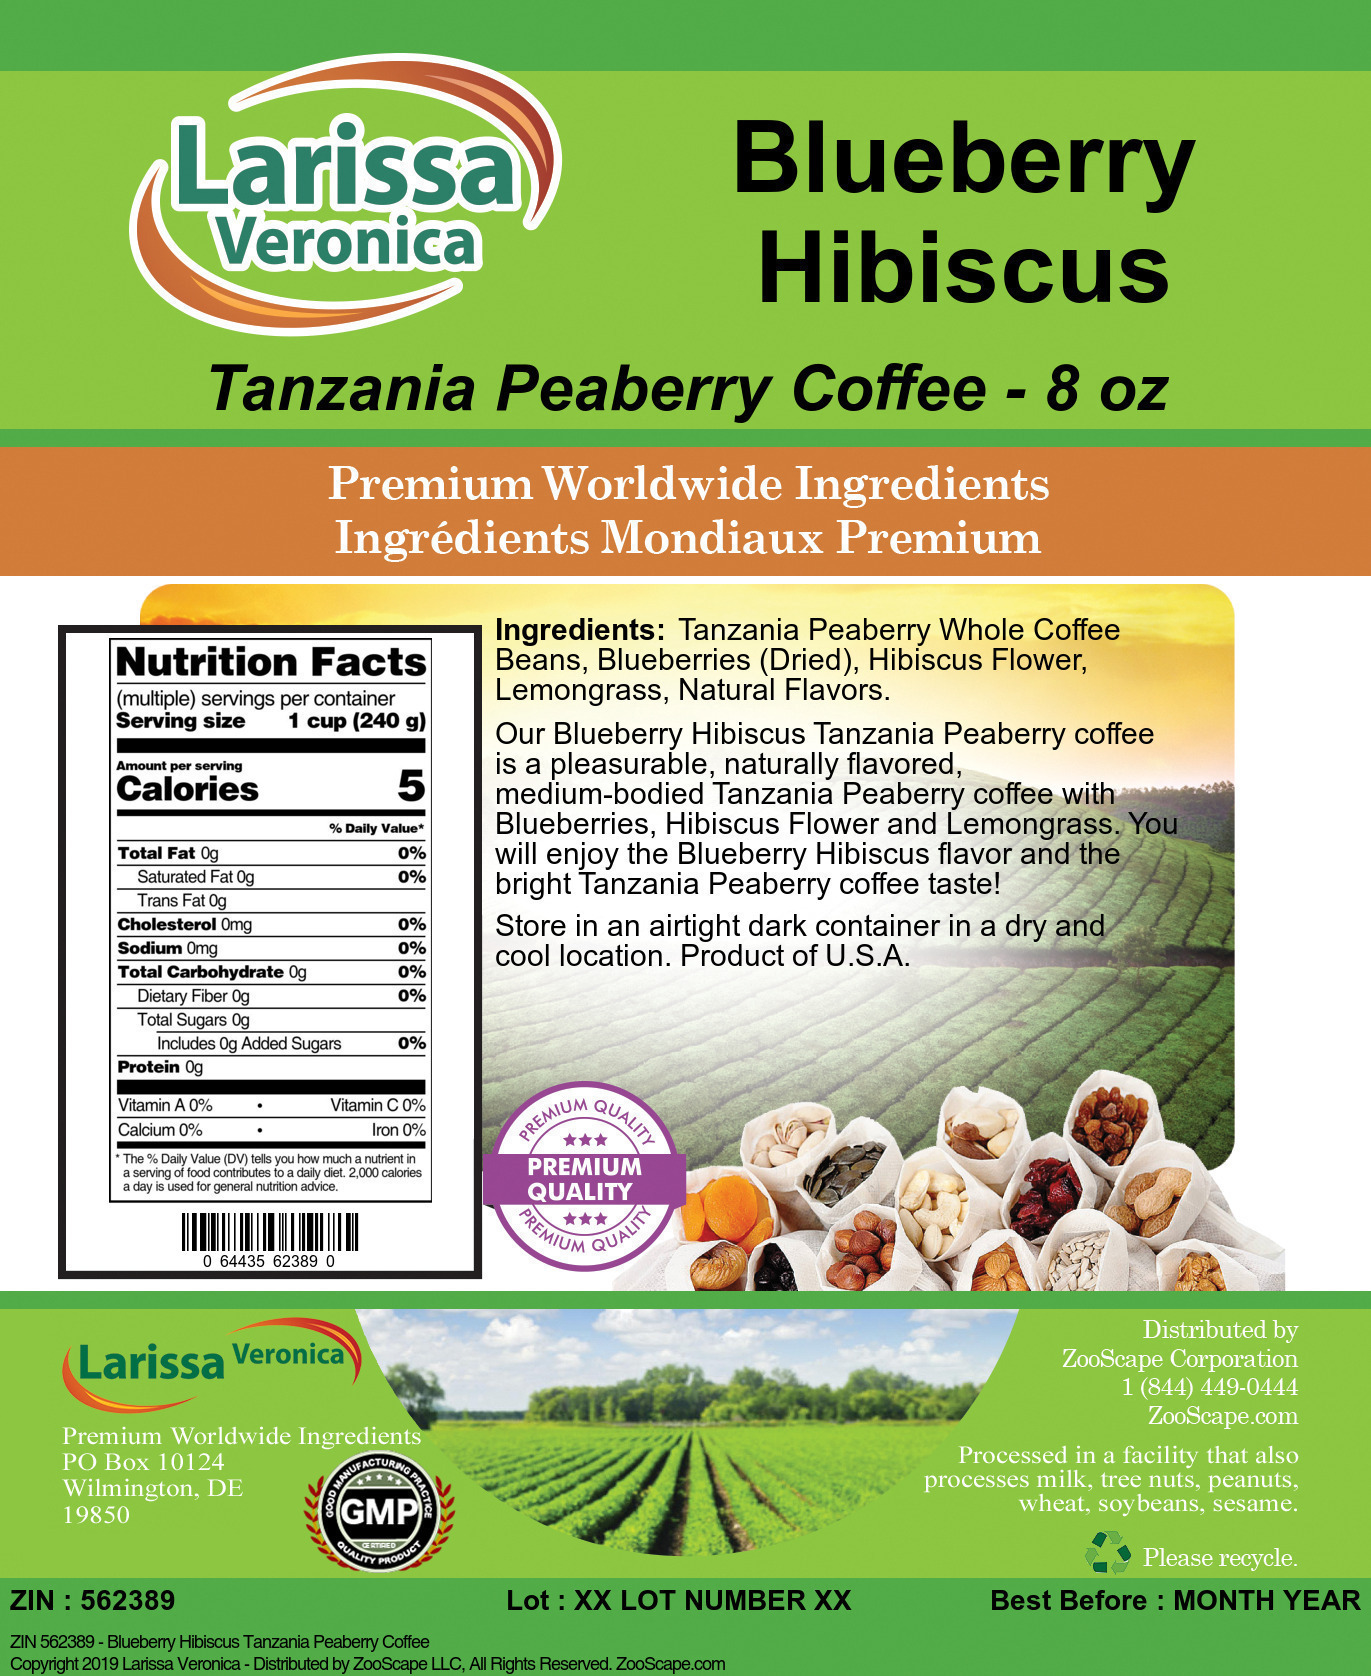 Blueberry Hibiscus Tanzania Peaberry Coffee - Label